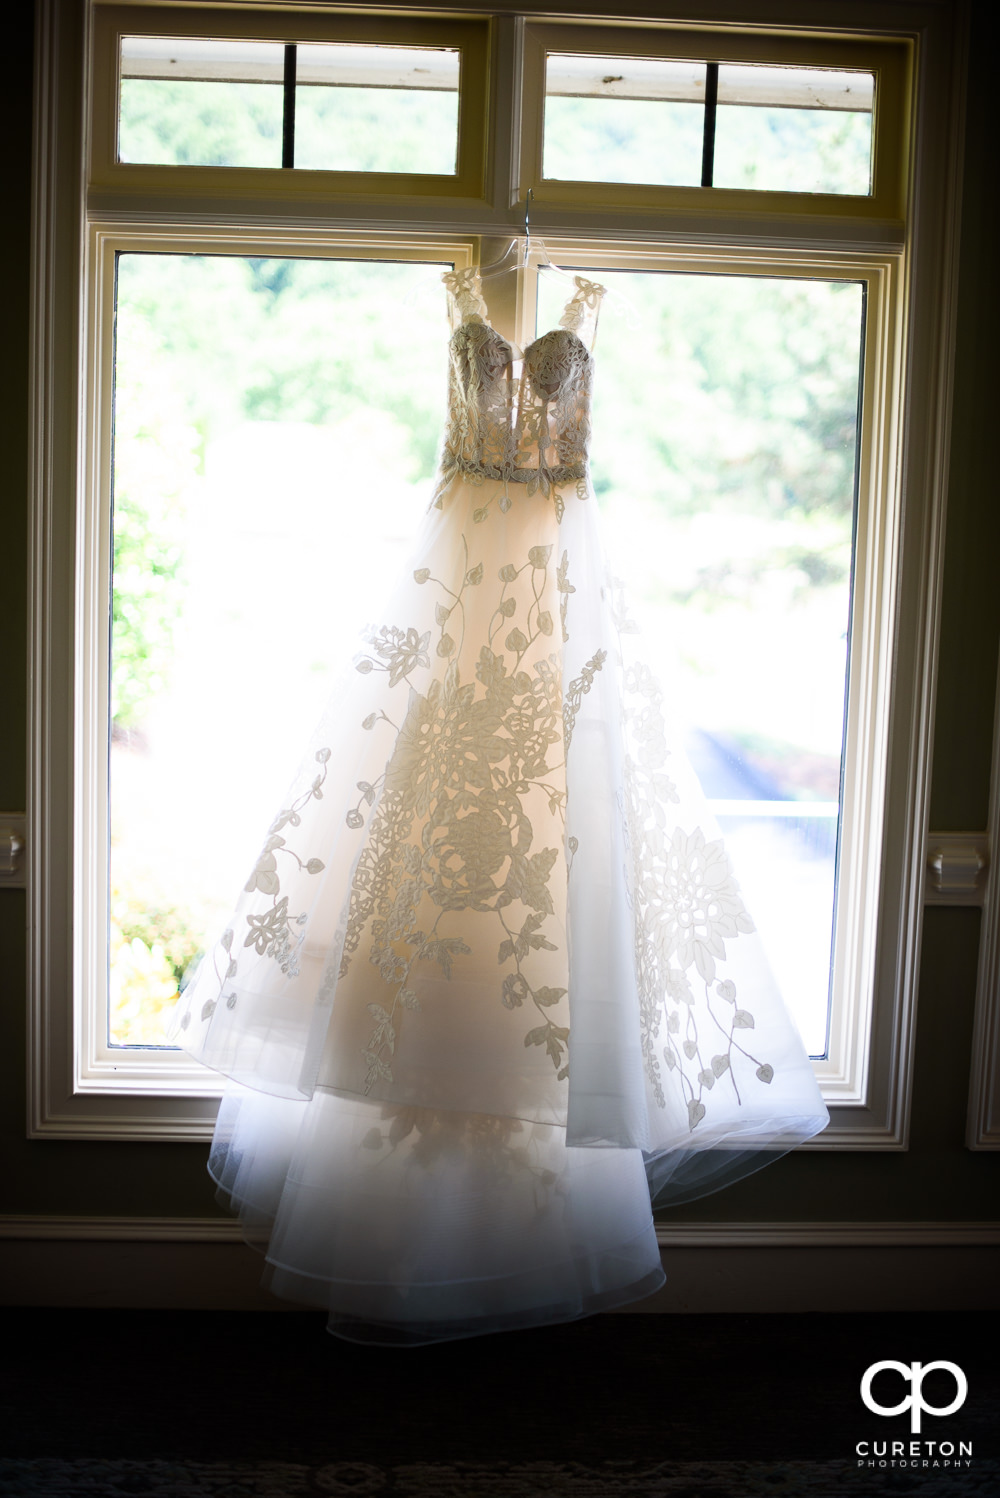 Bride's dress hanging in the window.